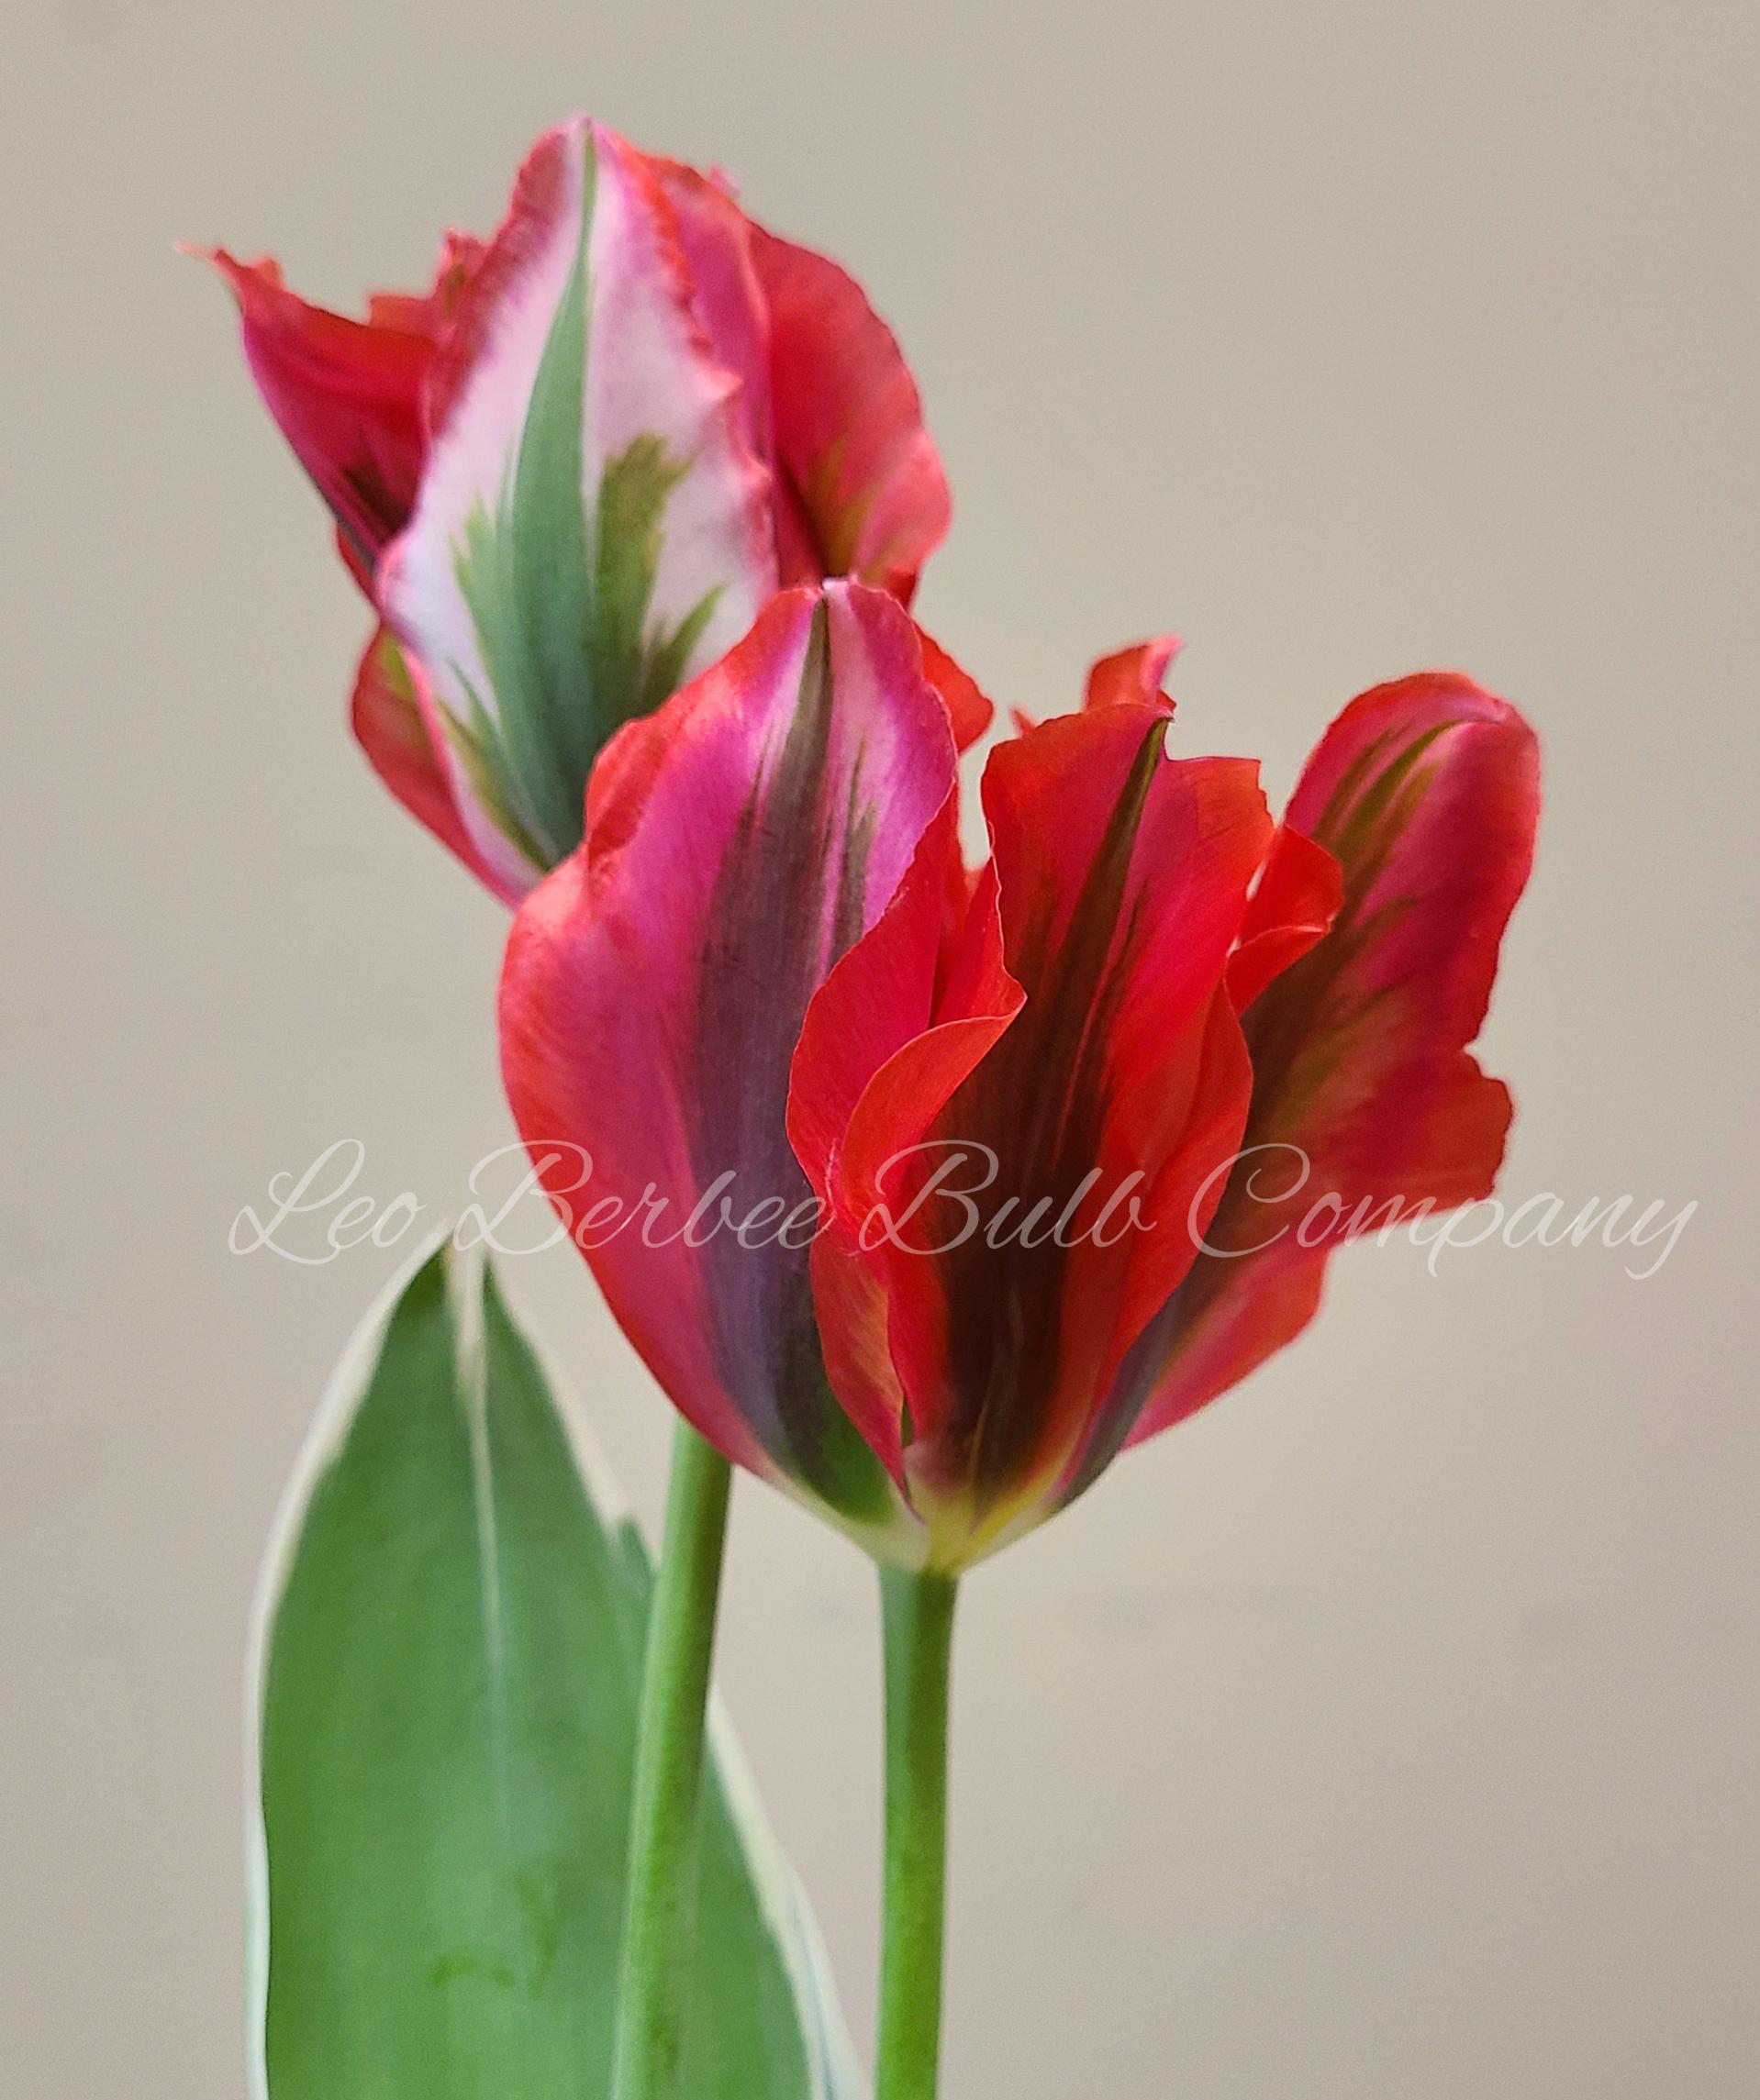 Tulip Viridiflora 'Esperanto' - Tulip from Leo Berbee Bulb Company